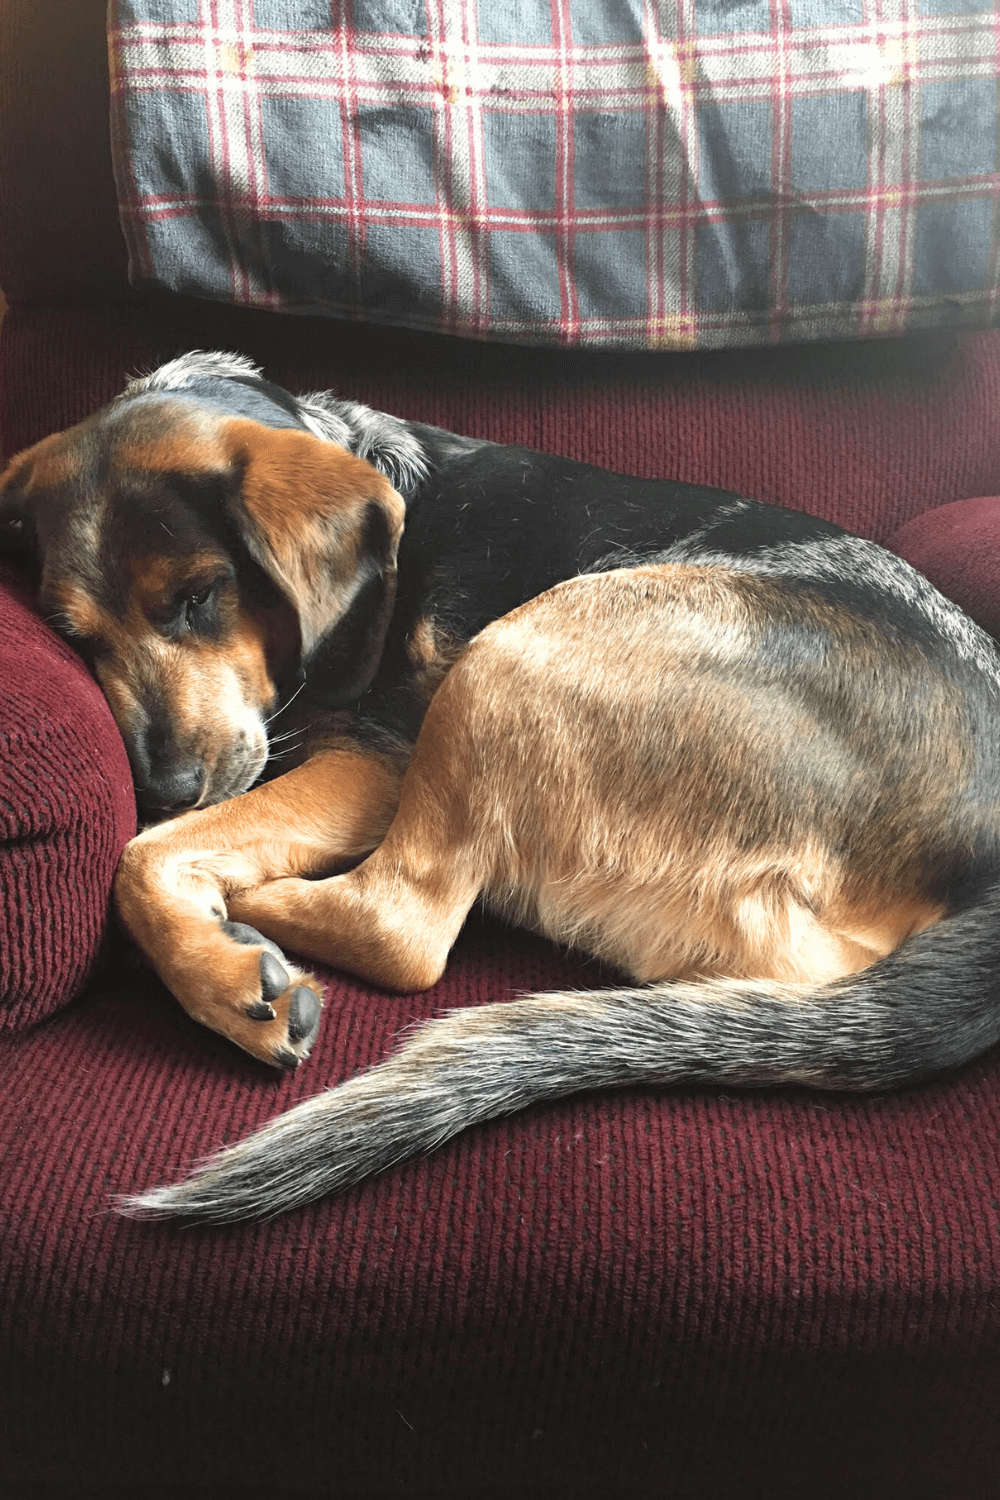 Rescue hound helps Vietnam veteran battle invisible wounds of war